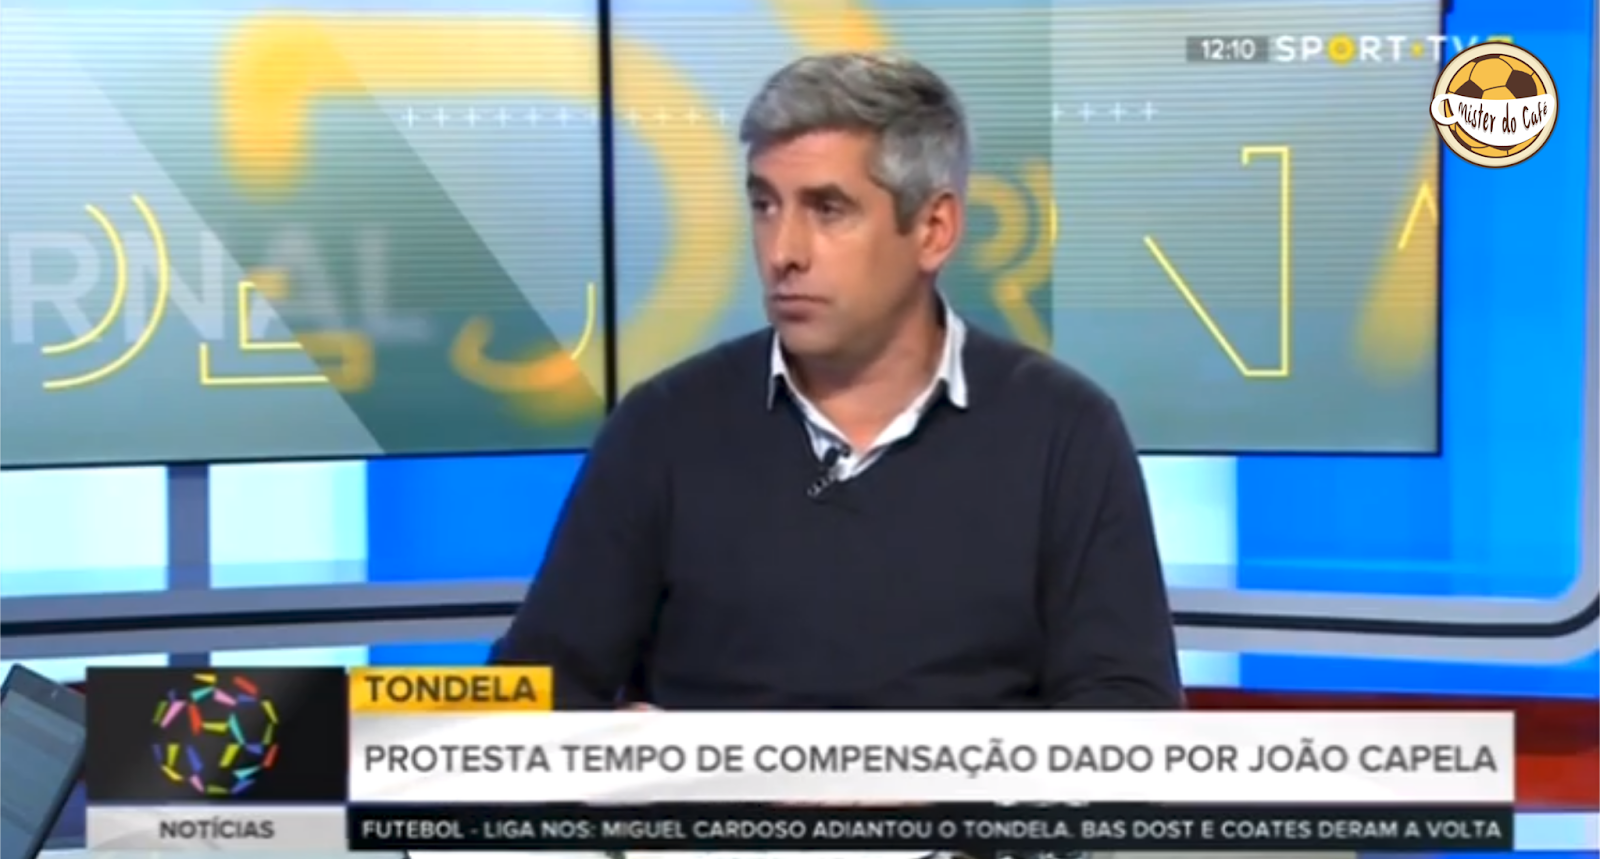 César Peixoto: A culpa não pode ser só dos árbitros